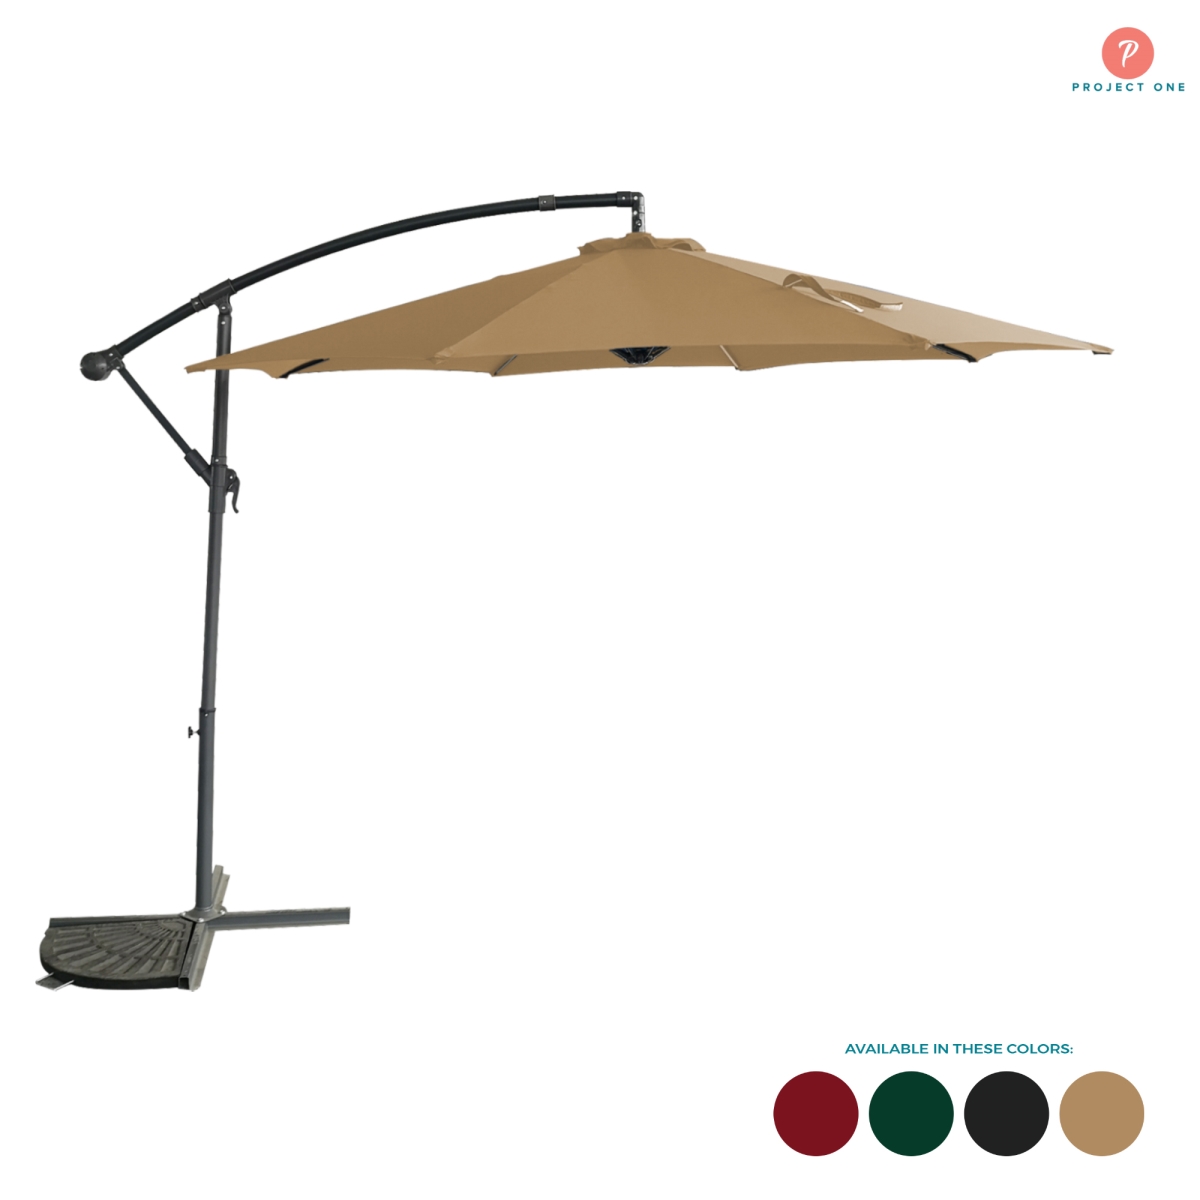 El-1001-beg 10 Ft. Patio Offset Cantilever Outdoor Umbrella, Beige